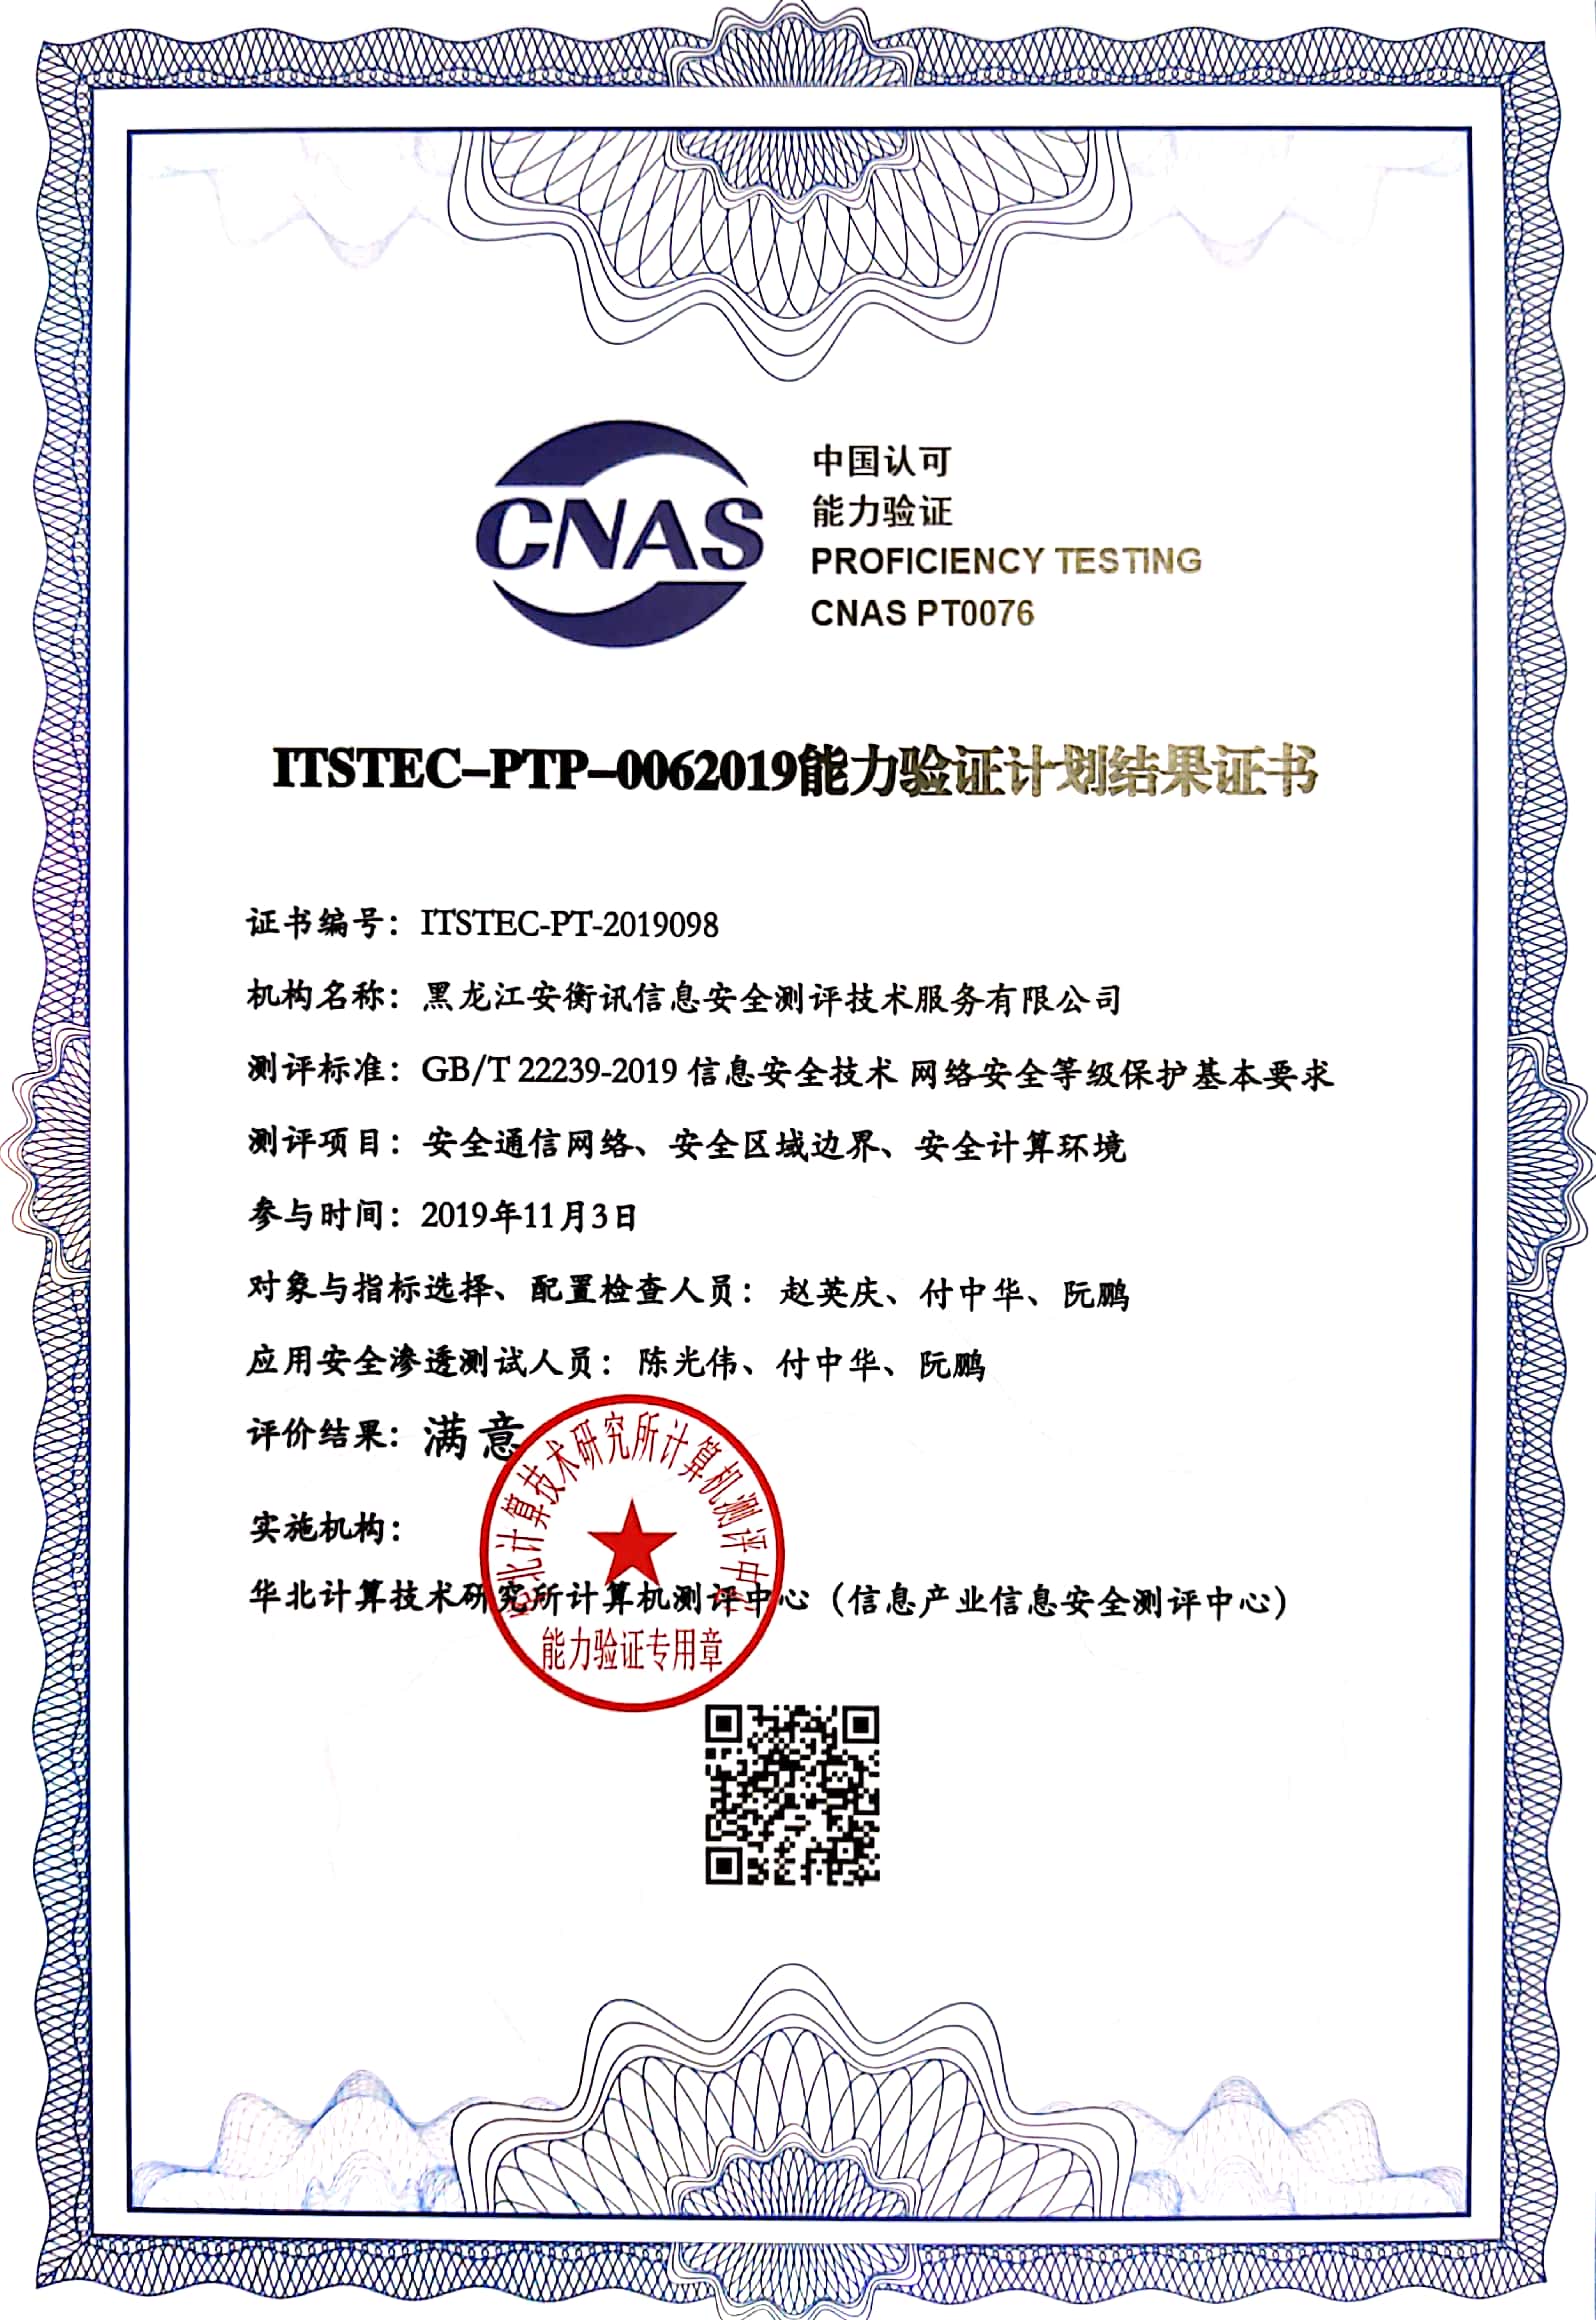 CNAS ITSTEC-PTP-0062019 Proficiency Testing Program Result Certificate